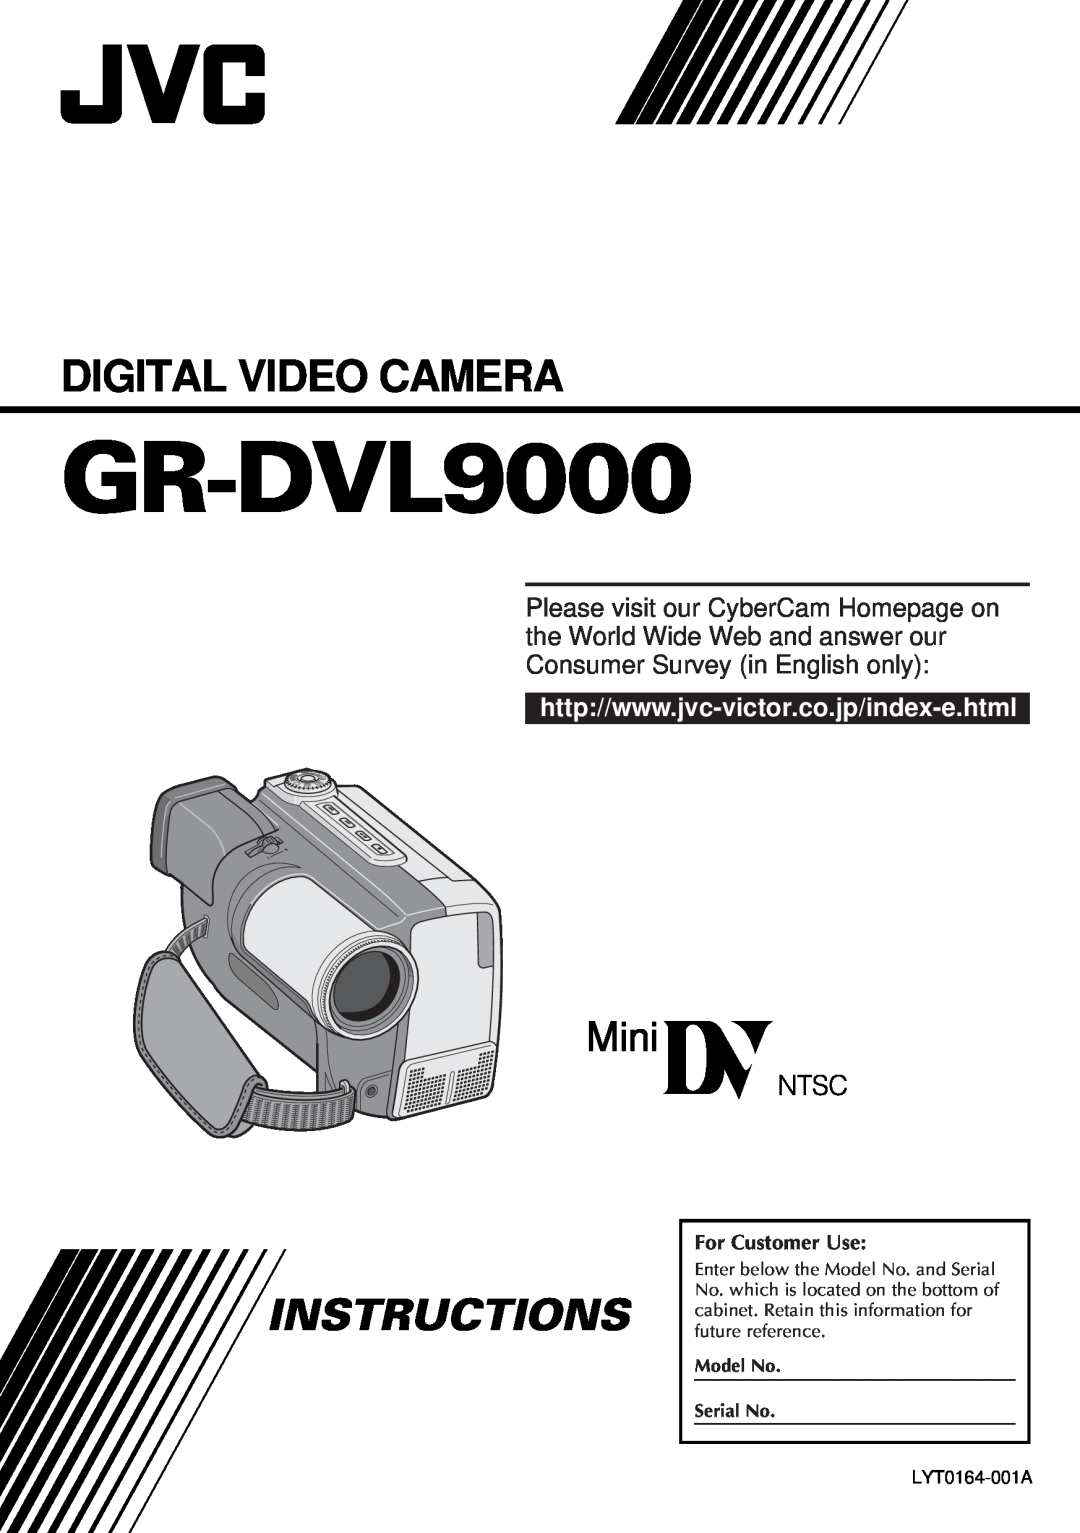 JVC GR-DVL9000 manual Digital Video Camera, Instructions, English, LYT0166-001A EN 